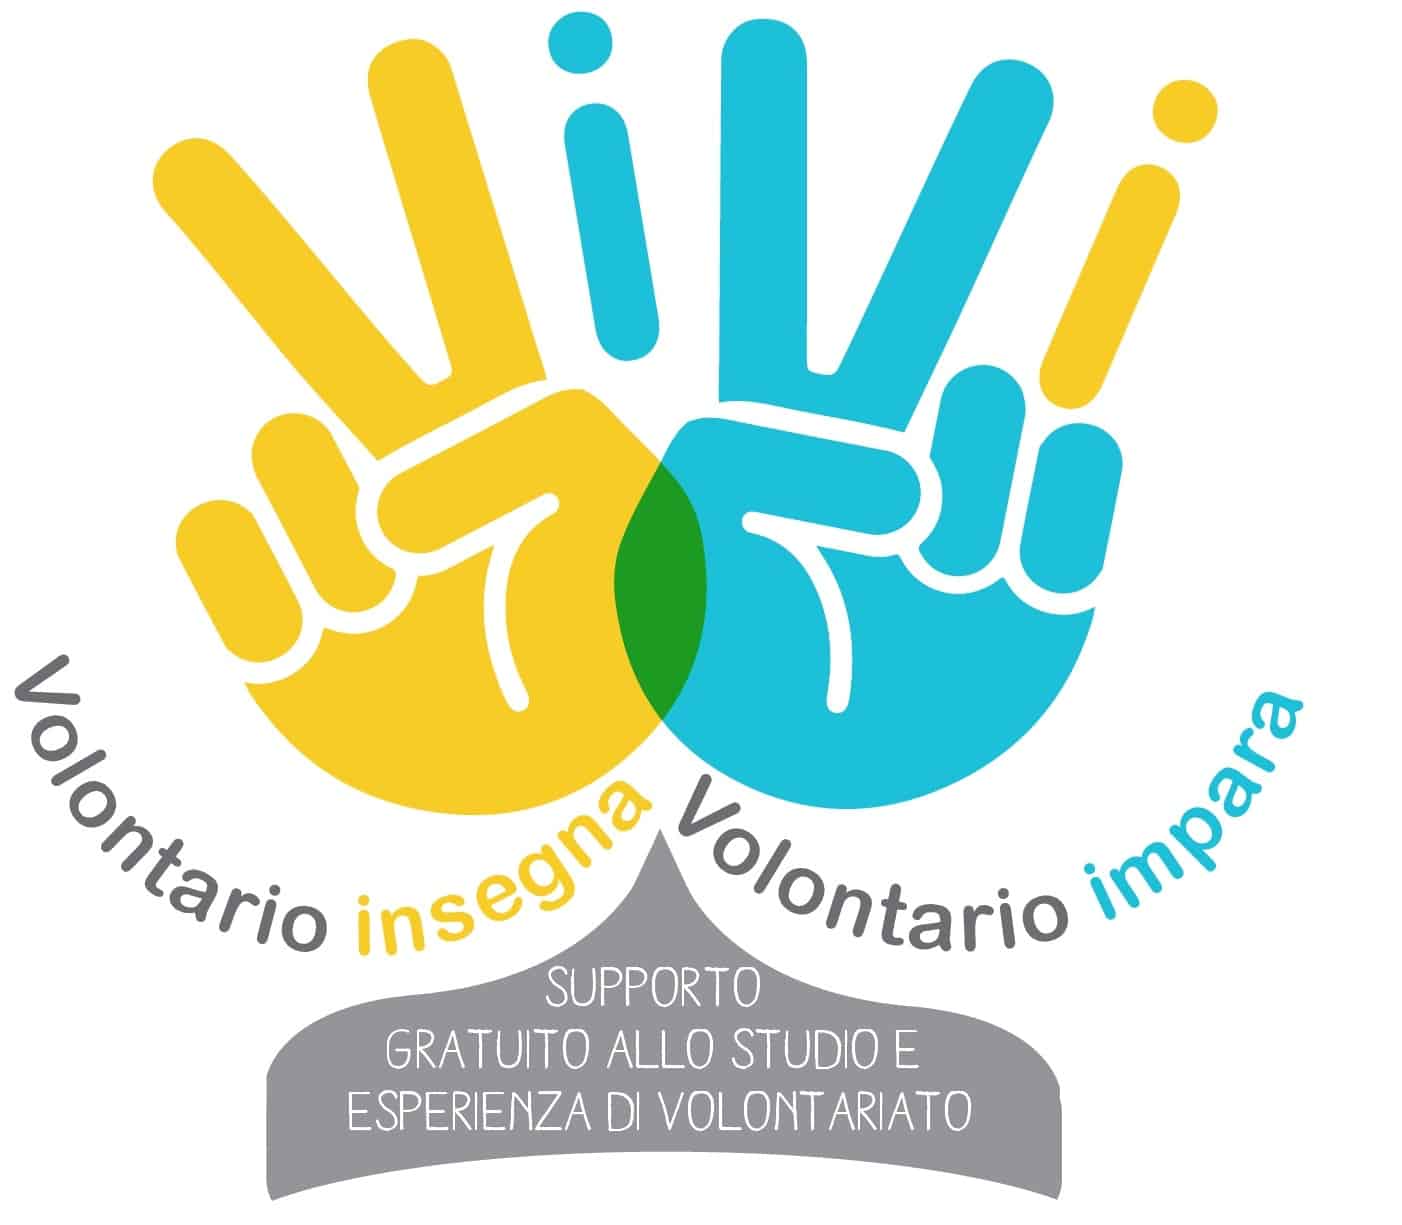 VIVI: Volontario Insegna